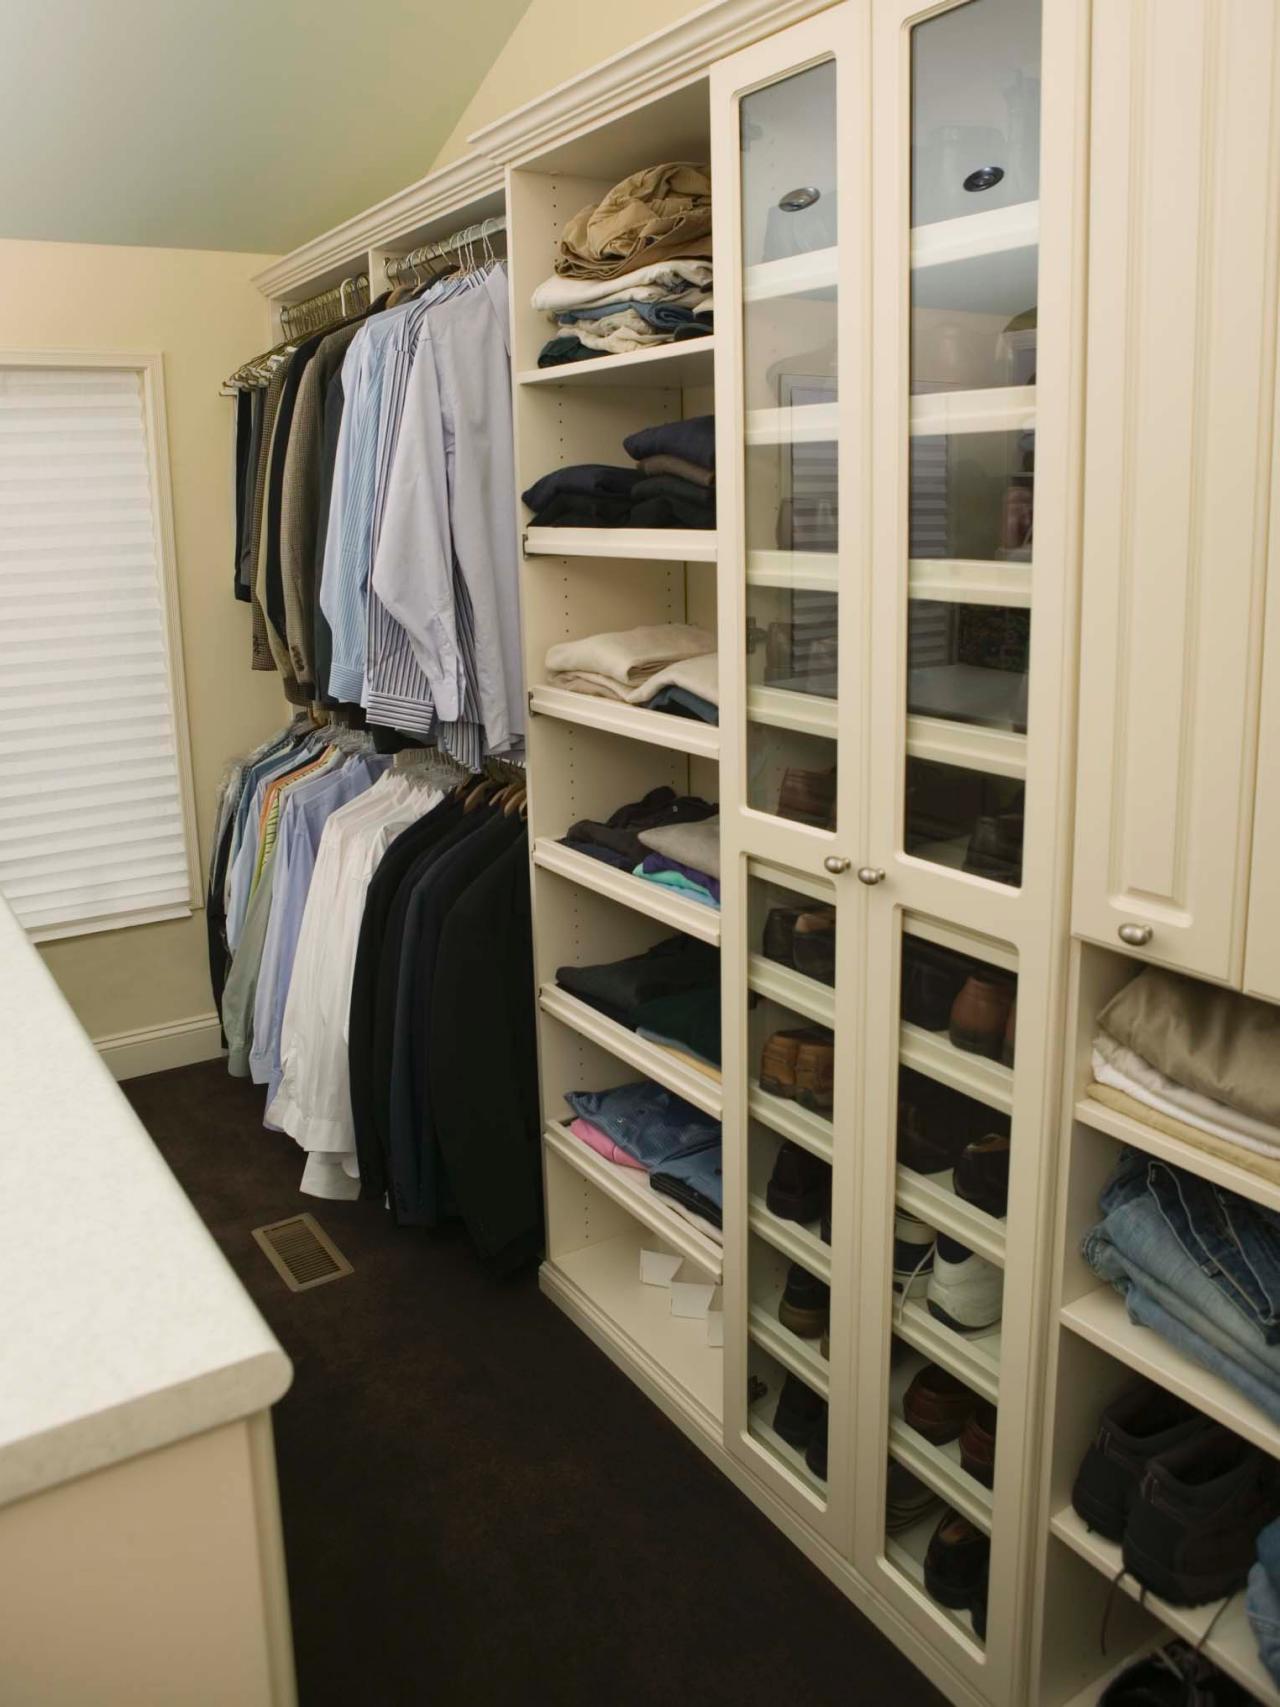 10 Steps To An Organized Closet, How To Organize Clothing Shelves